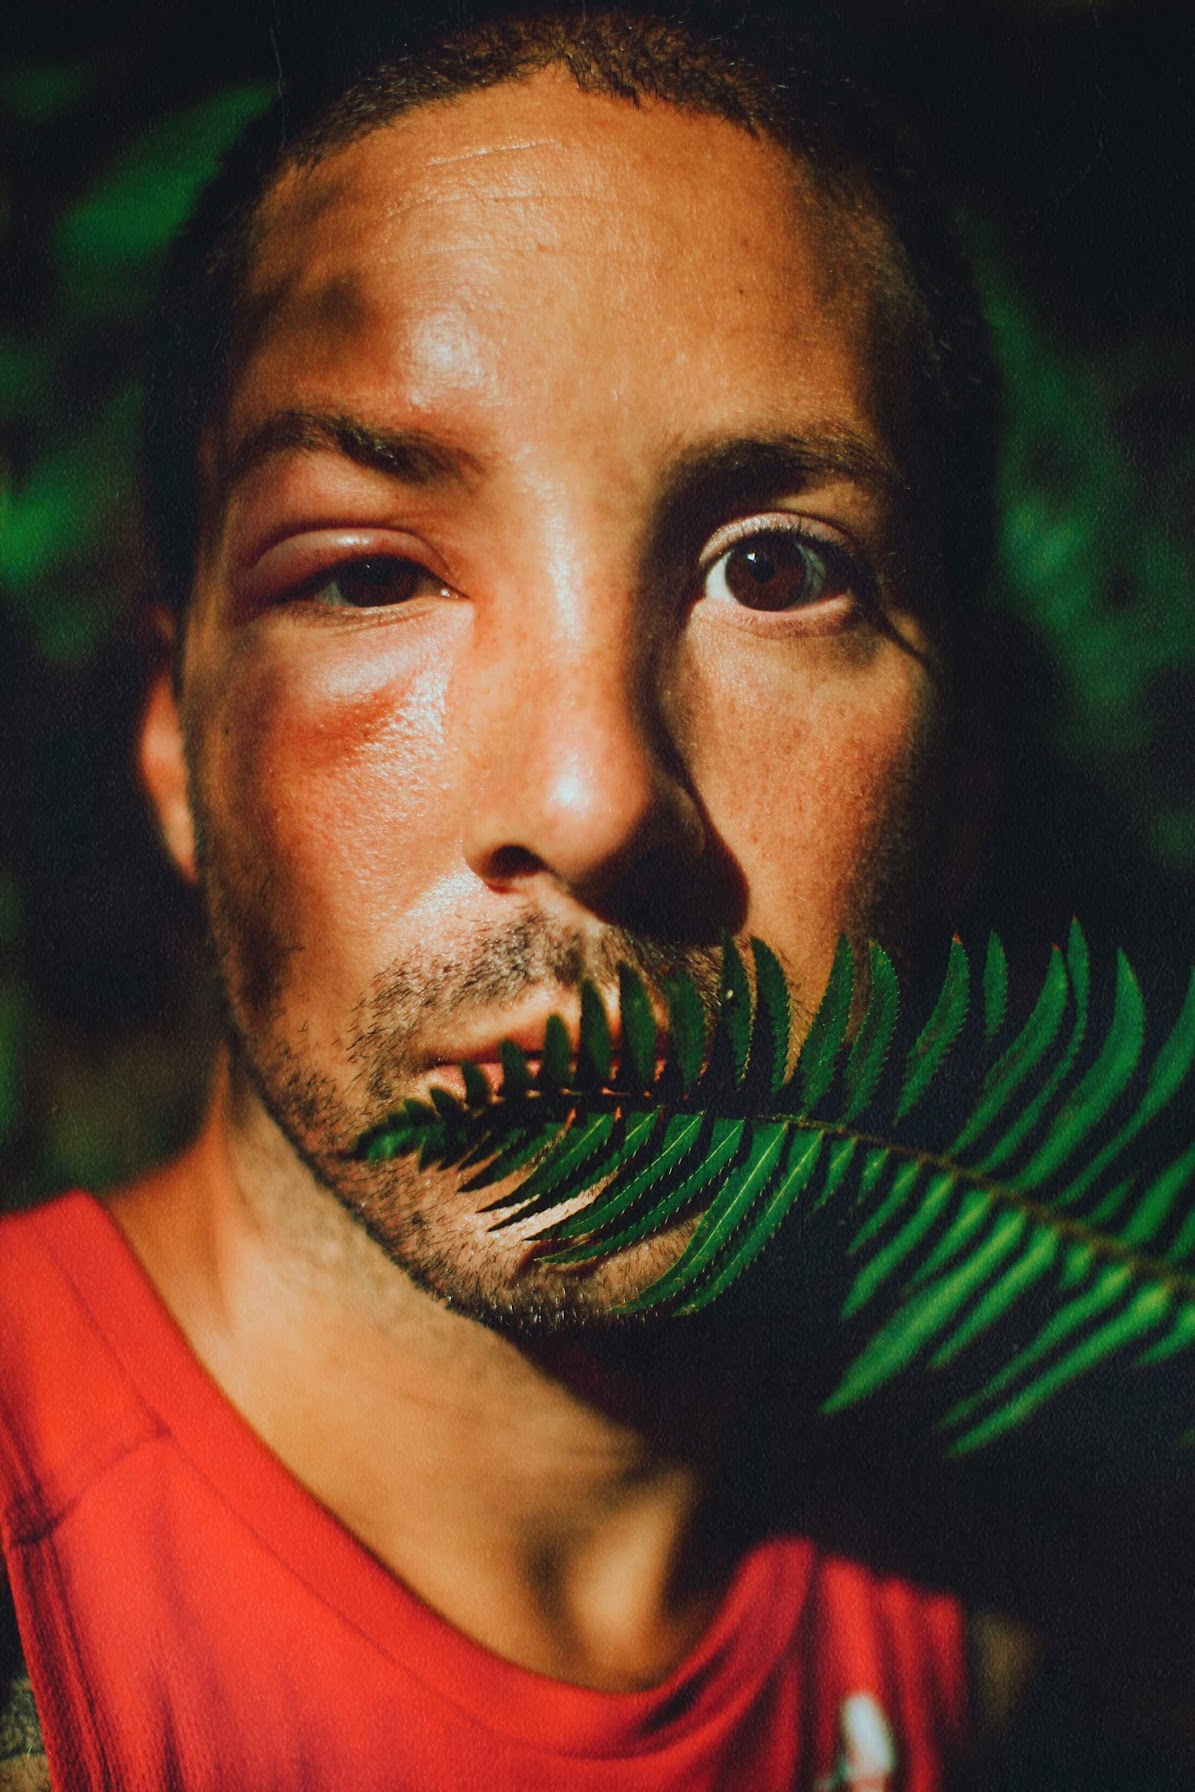 Tommy Corey self portrait of a man with a swollen eye behind a fern.
